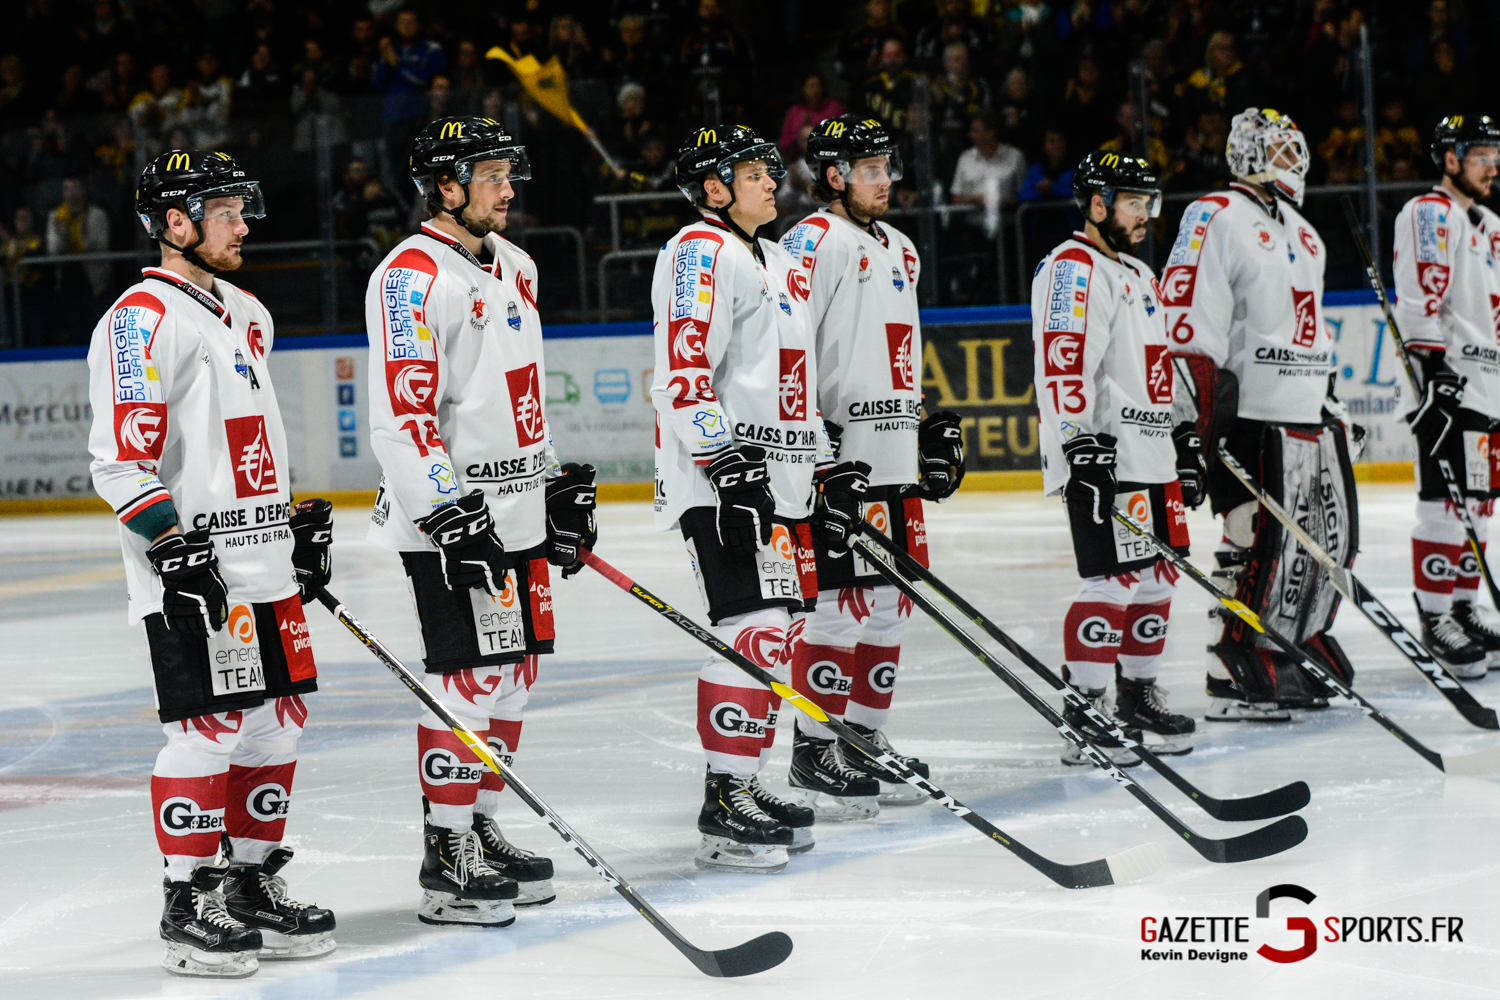 Hockeysurglace Rouen Vs Amiens Kevin Devigne Gazettesports 8